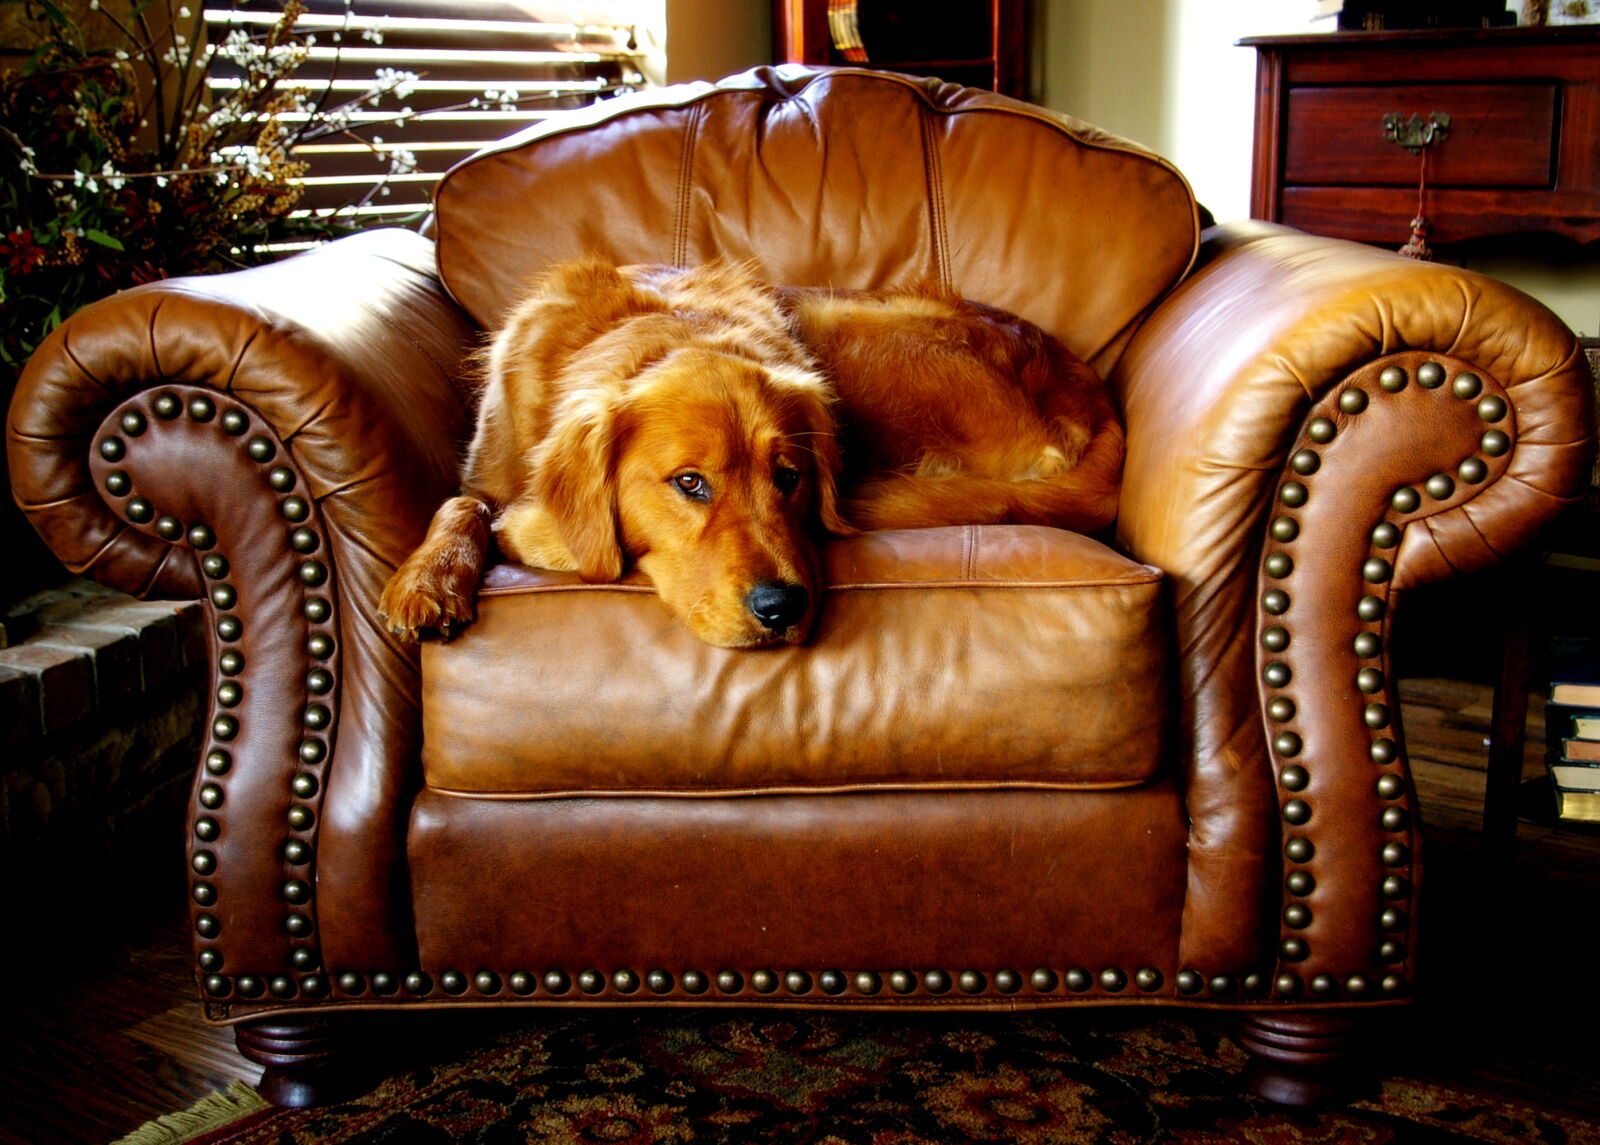 Pentax *ist DL sample photo. Canine, chair, cushion, dog photography